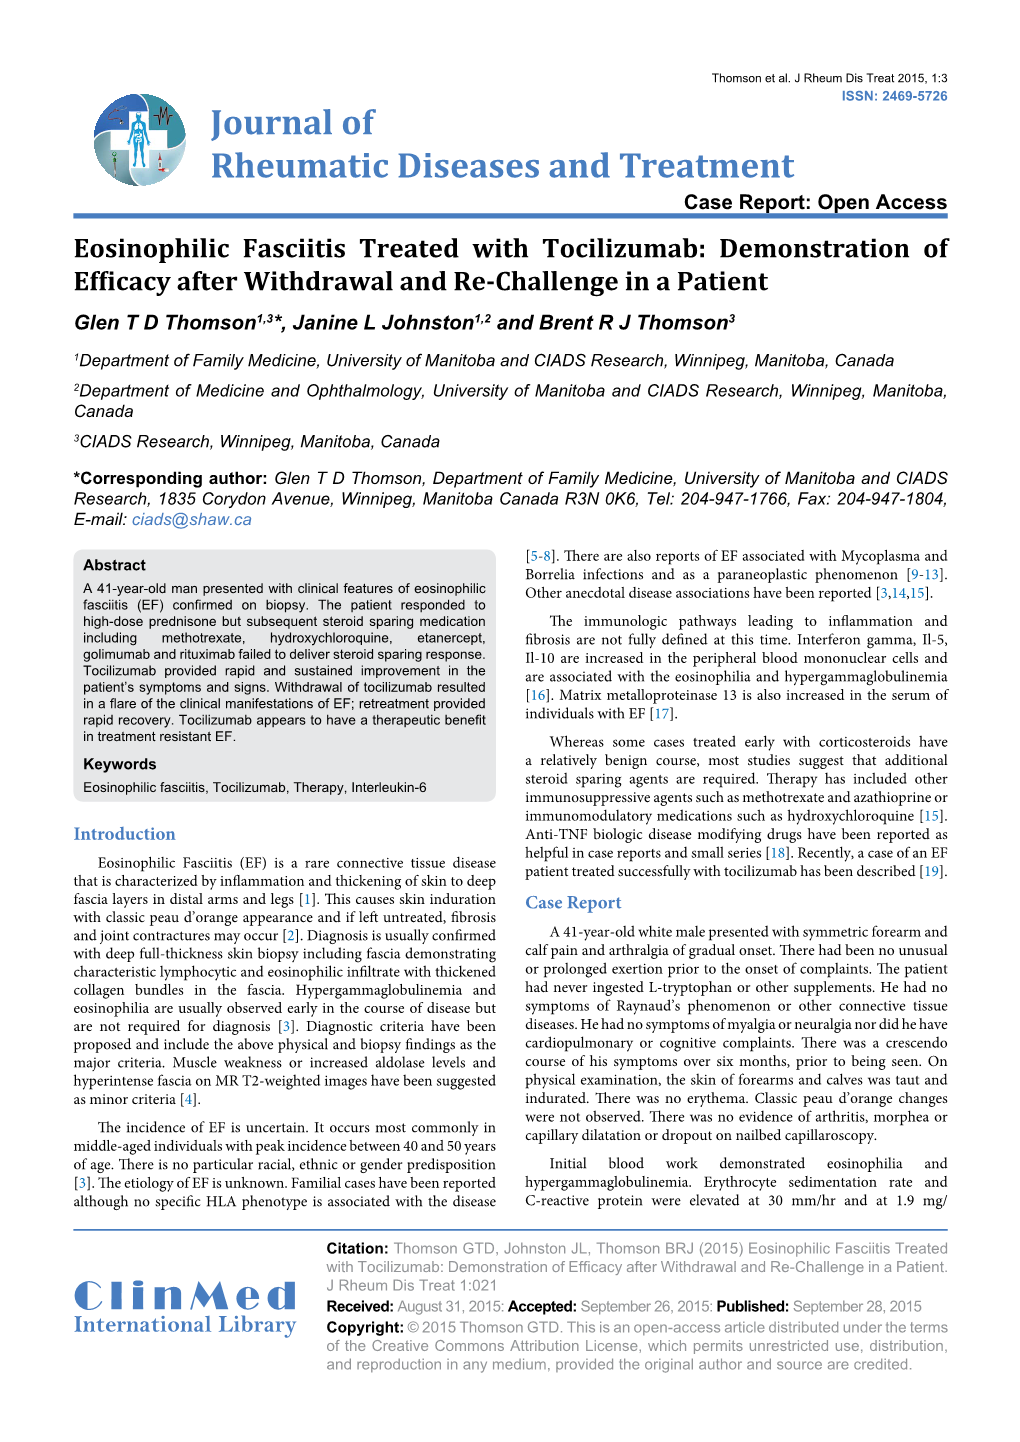 Eosinophilic Fasciitis Treated with Tocilizumab